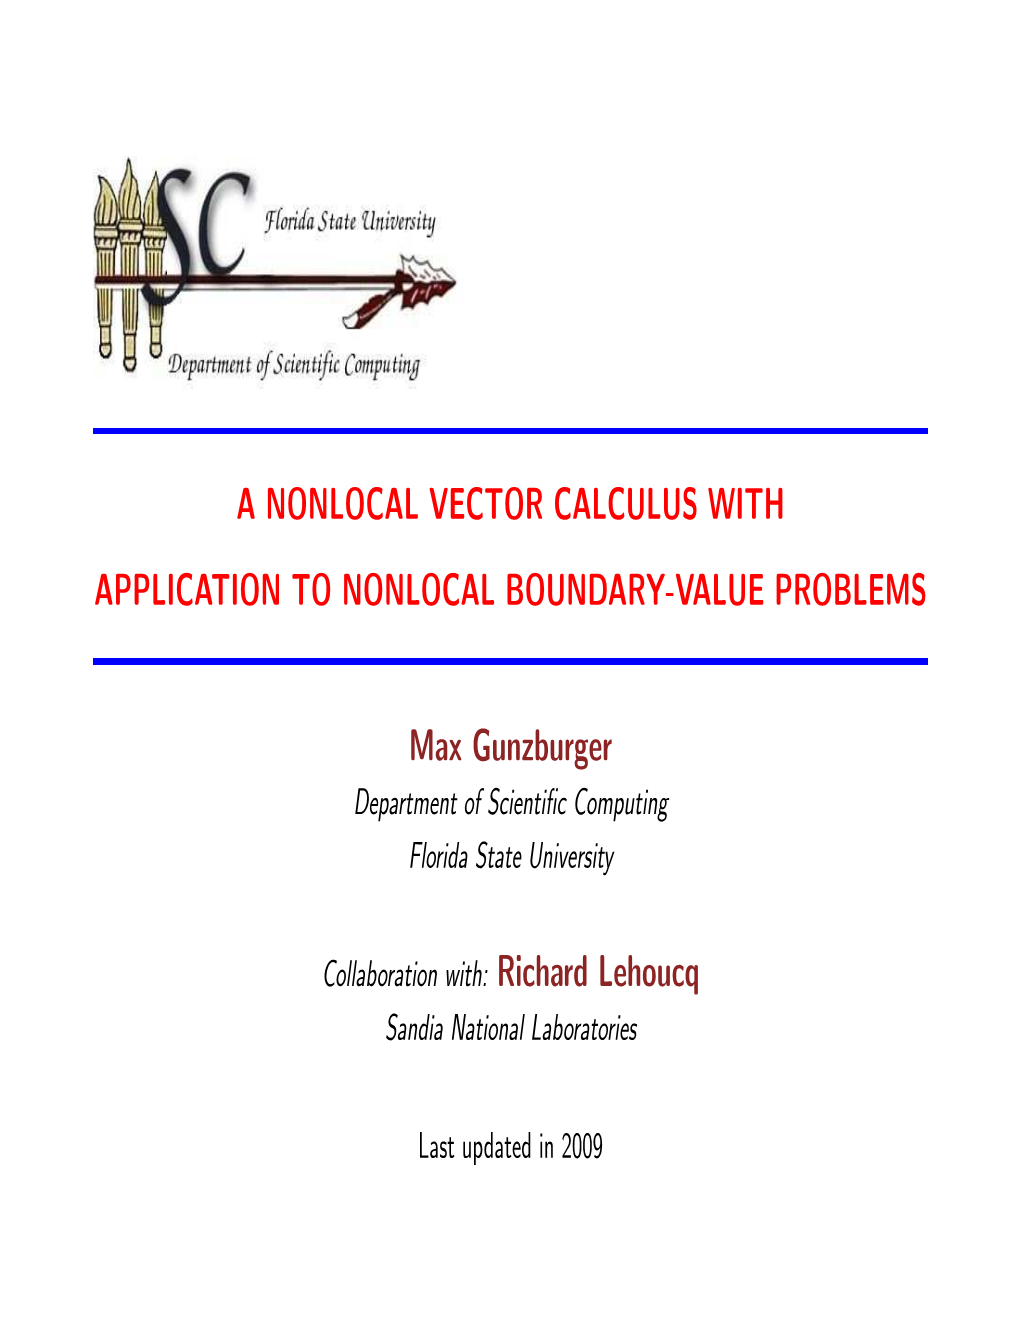 A Nonlocal Vector Calculus with Application to Nonlocal Boundary-Value Problems